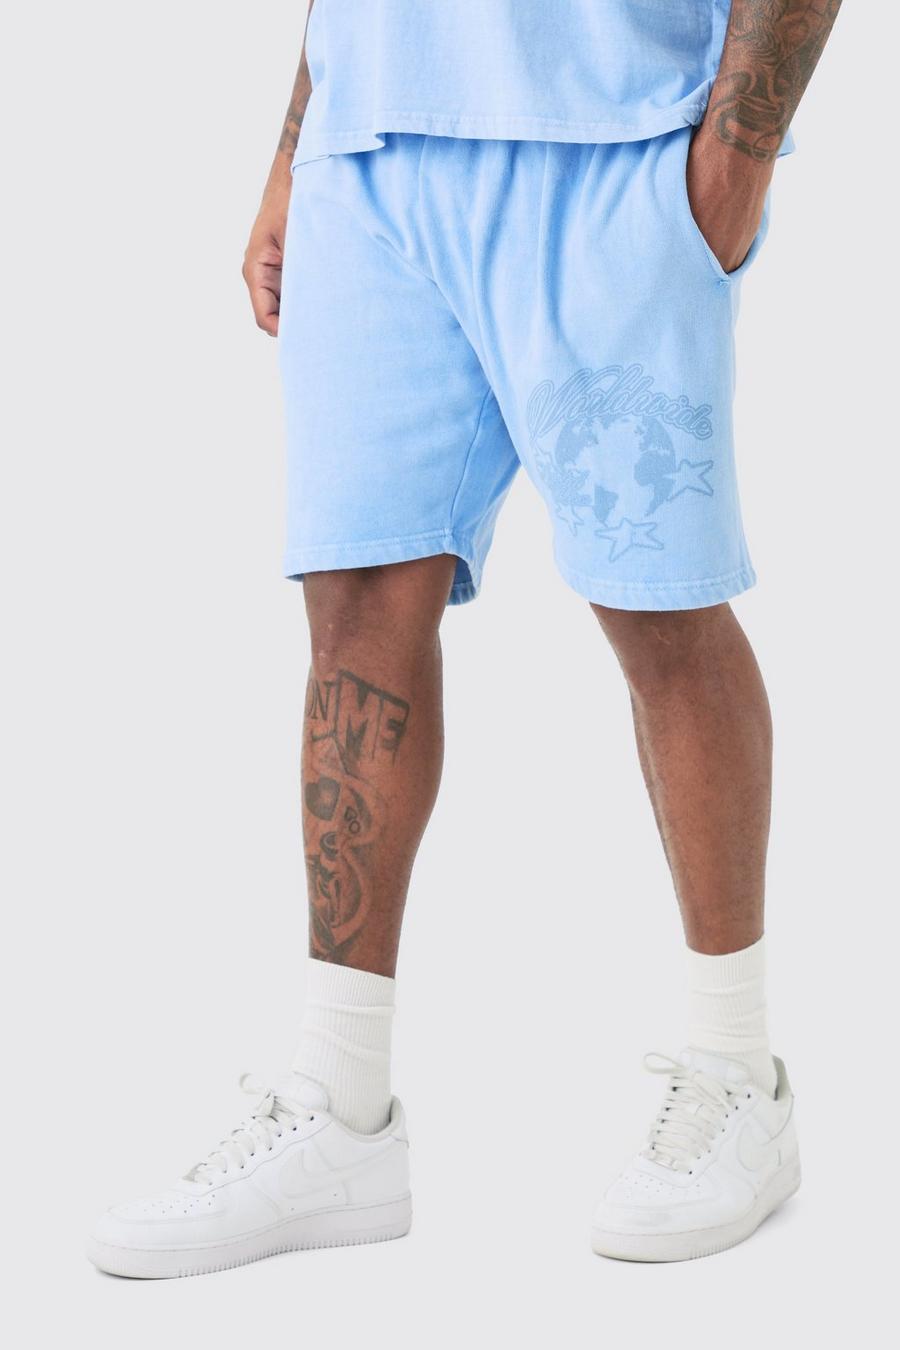 Pantalones cortos Plus oversize azules con estampado Dream Worldwide, Blue image number 1